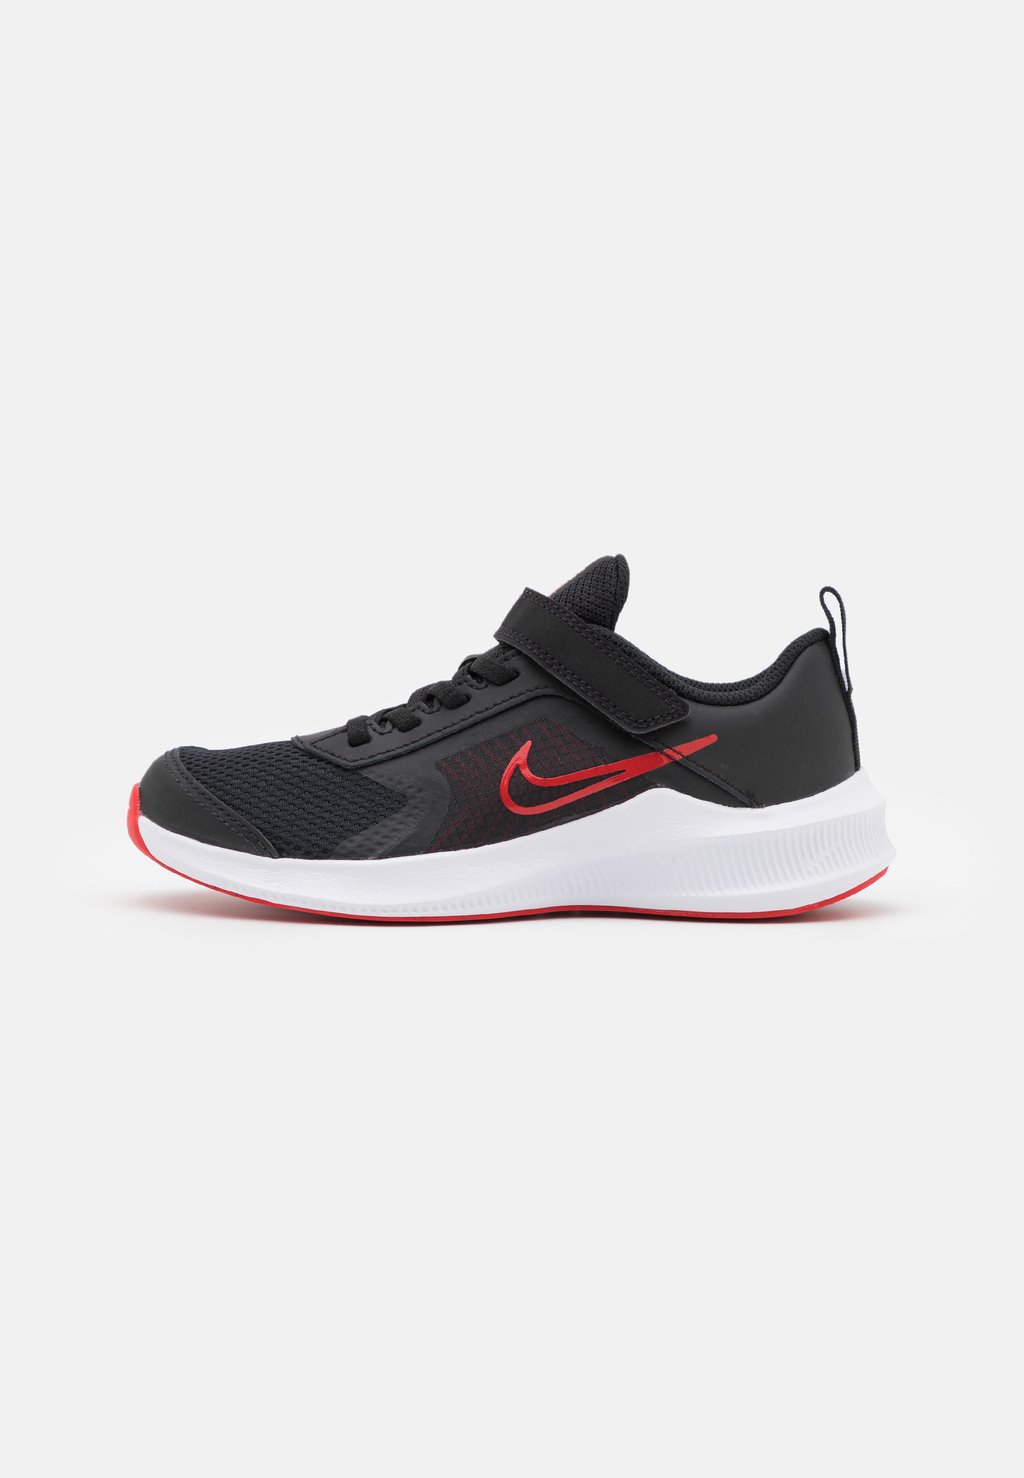 Нейтральные кроссовки Downshifter 11 Unisex Nike, цвет black/universe red/dark smoke grey/white